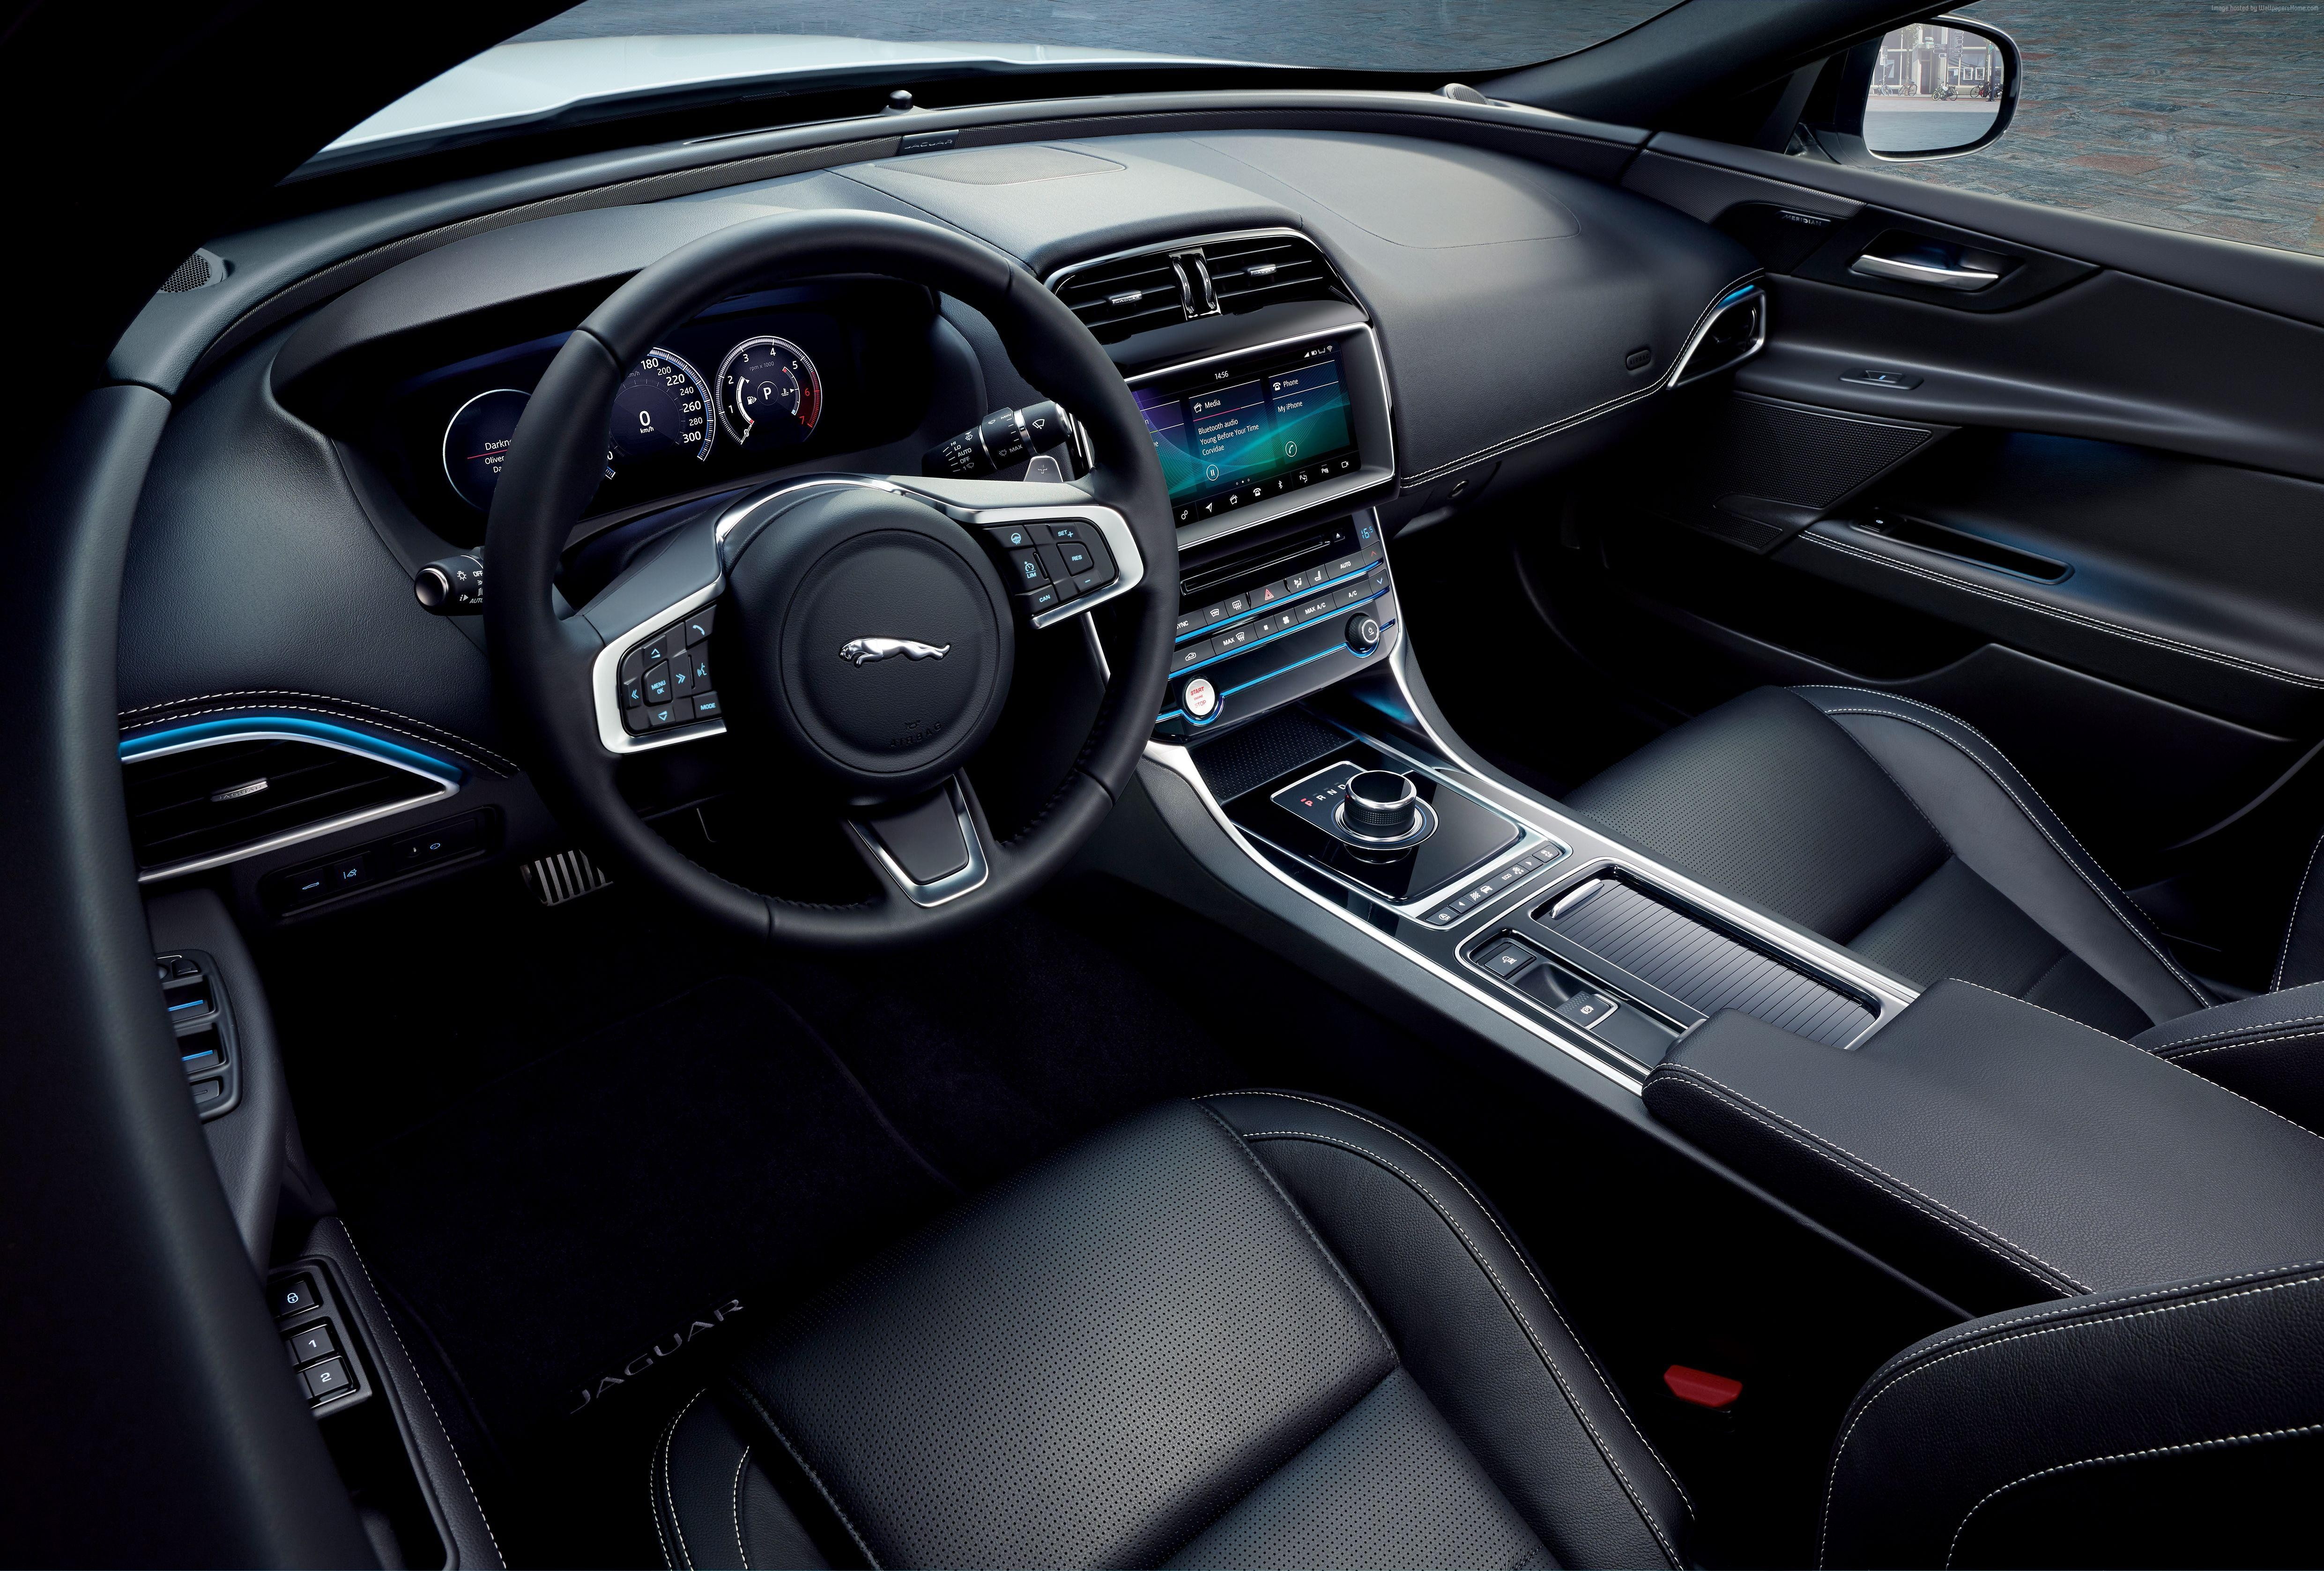 2019 Cars, 5K, Jaguar XE 300 Sport, luxury cars